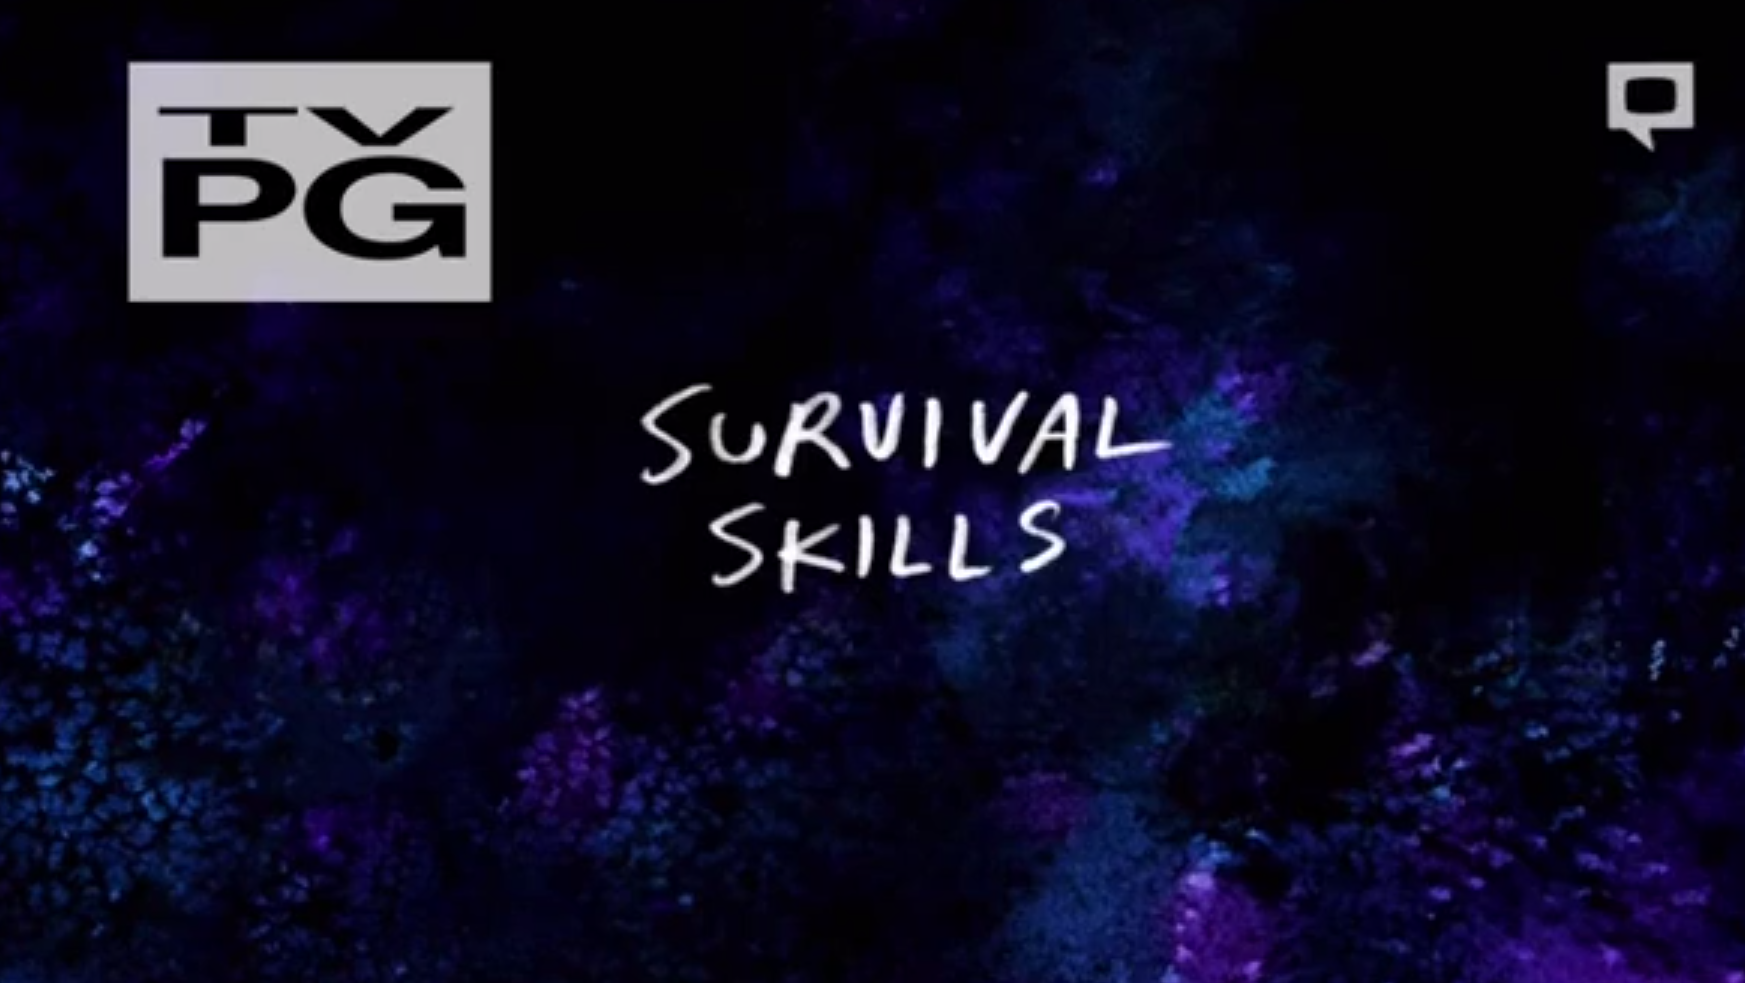 Survival skills - Wikipedia